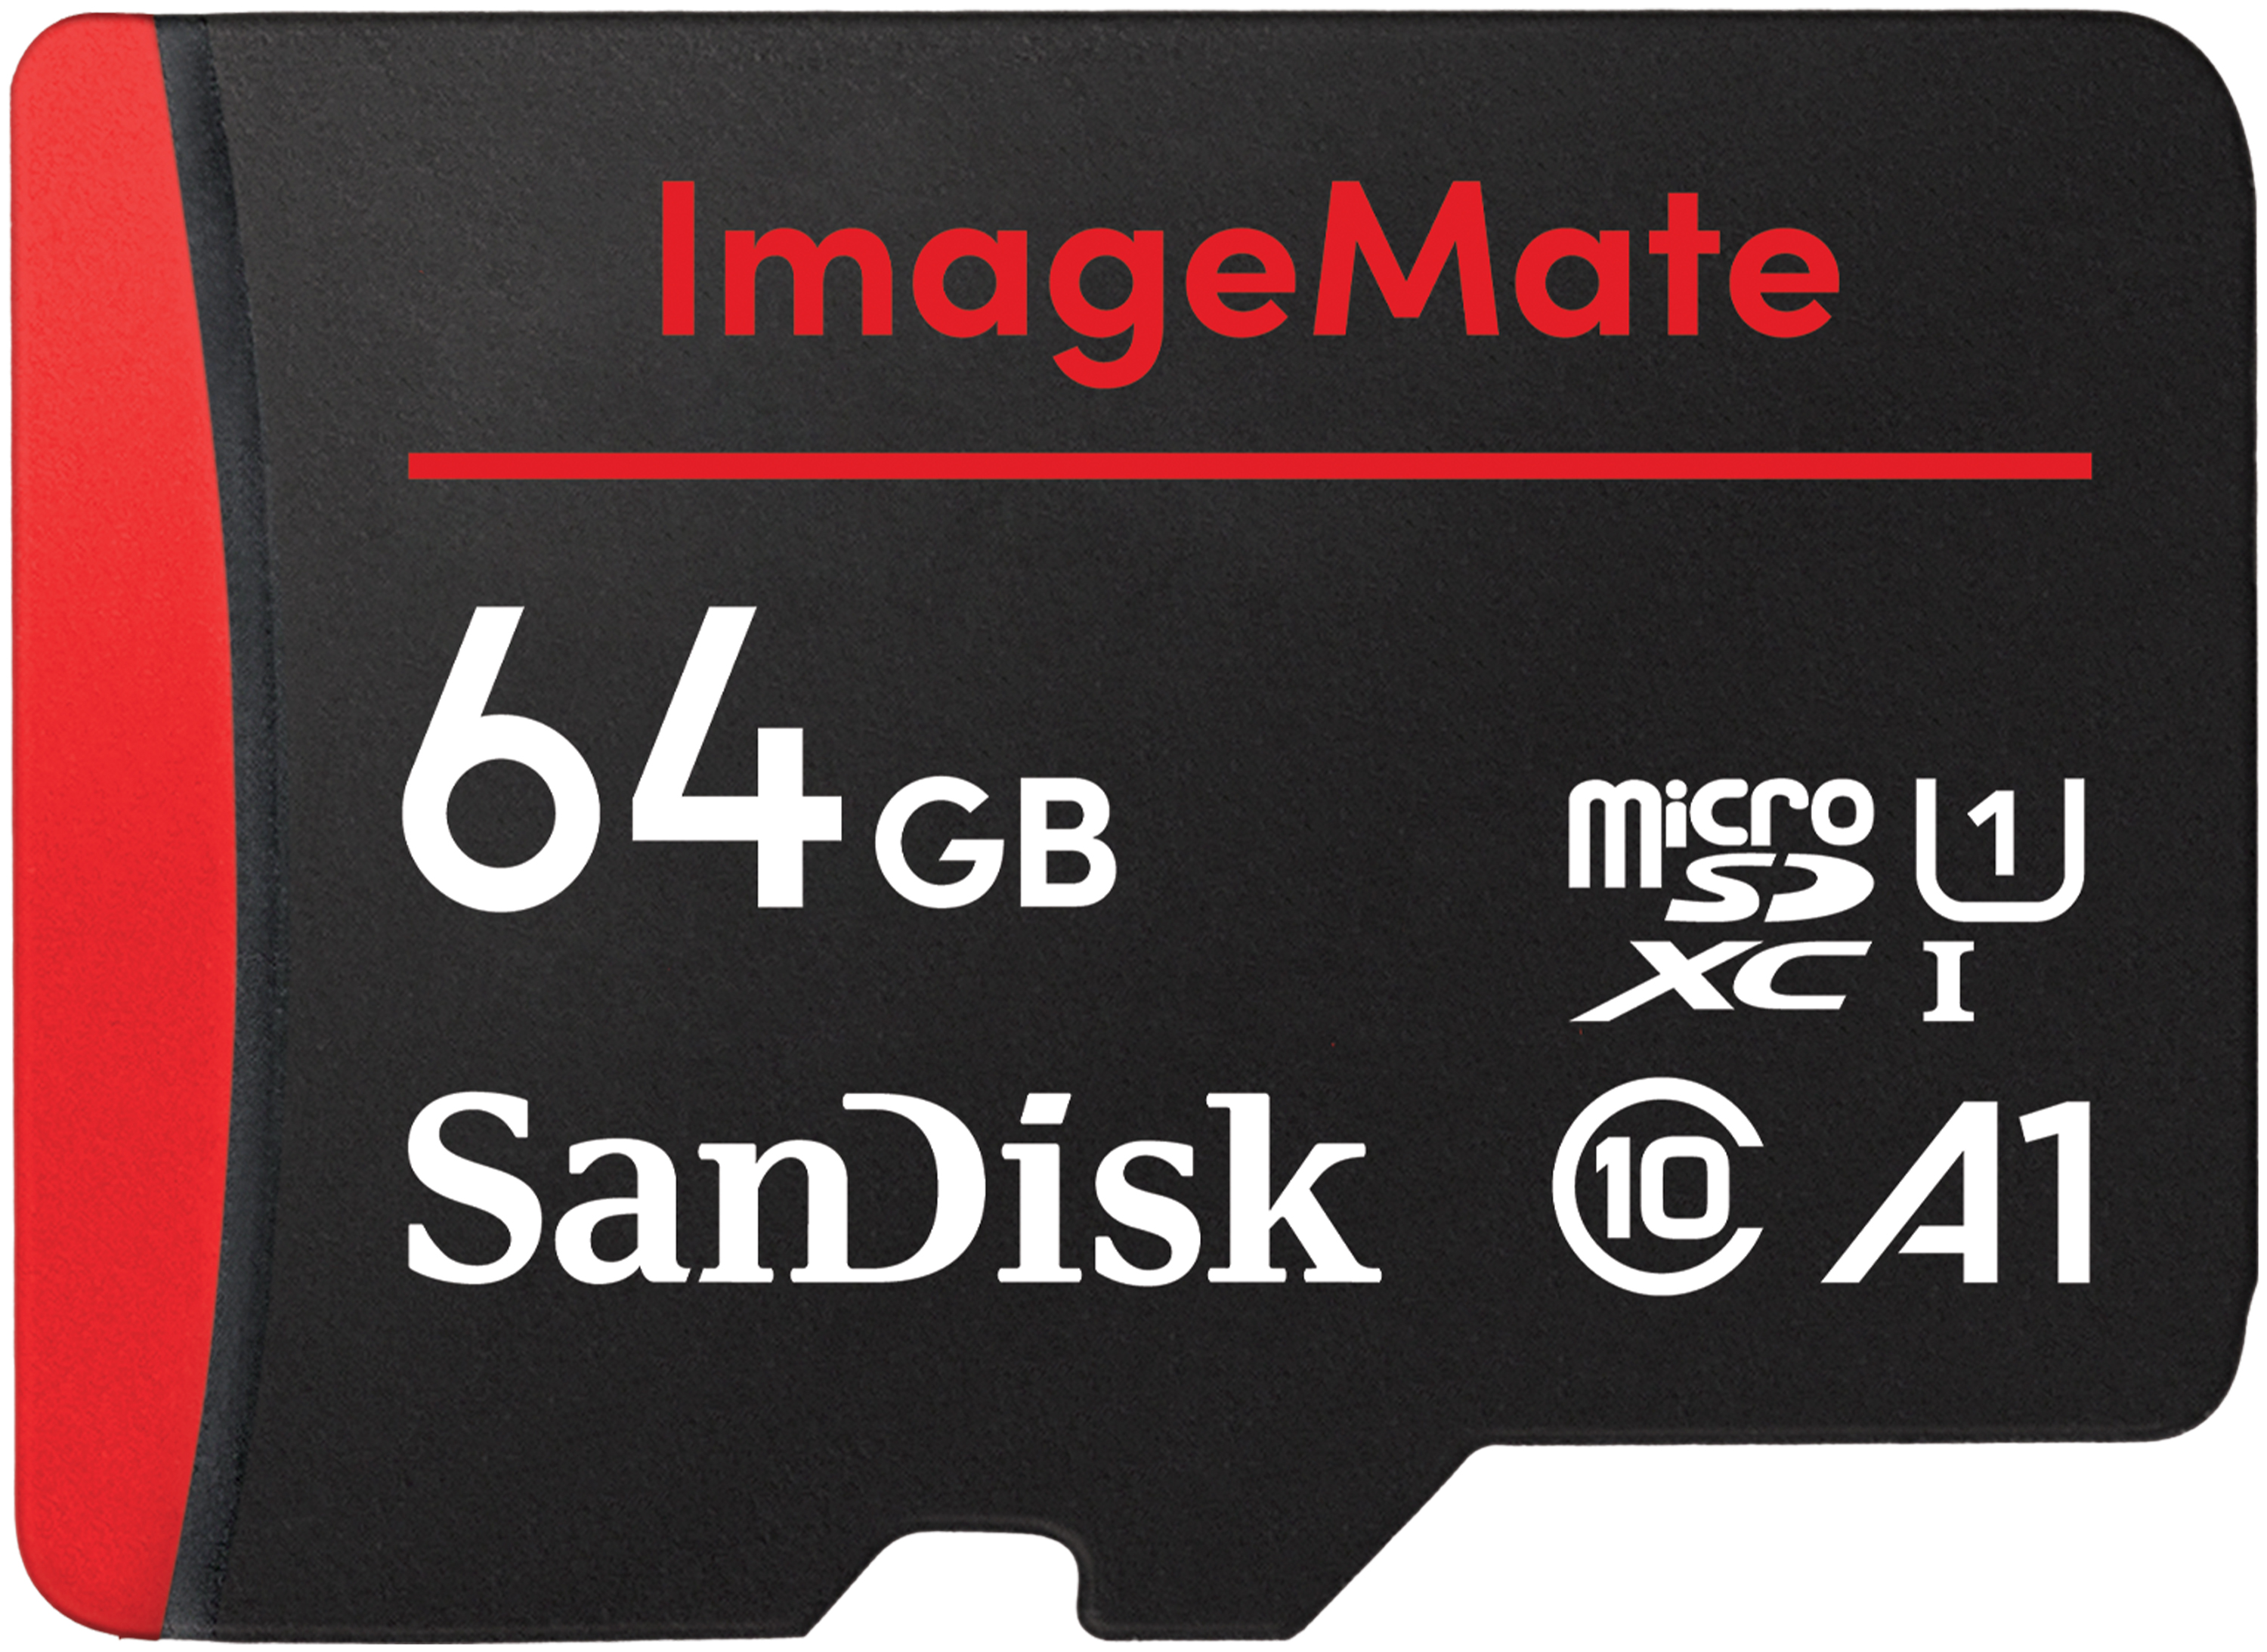 SanDisk 64GB ImageMate microSDXC UHS-1 Memory Card - 140MB/s - SDSQUA4-064G-AW6KA - image 1 of 8